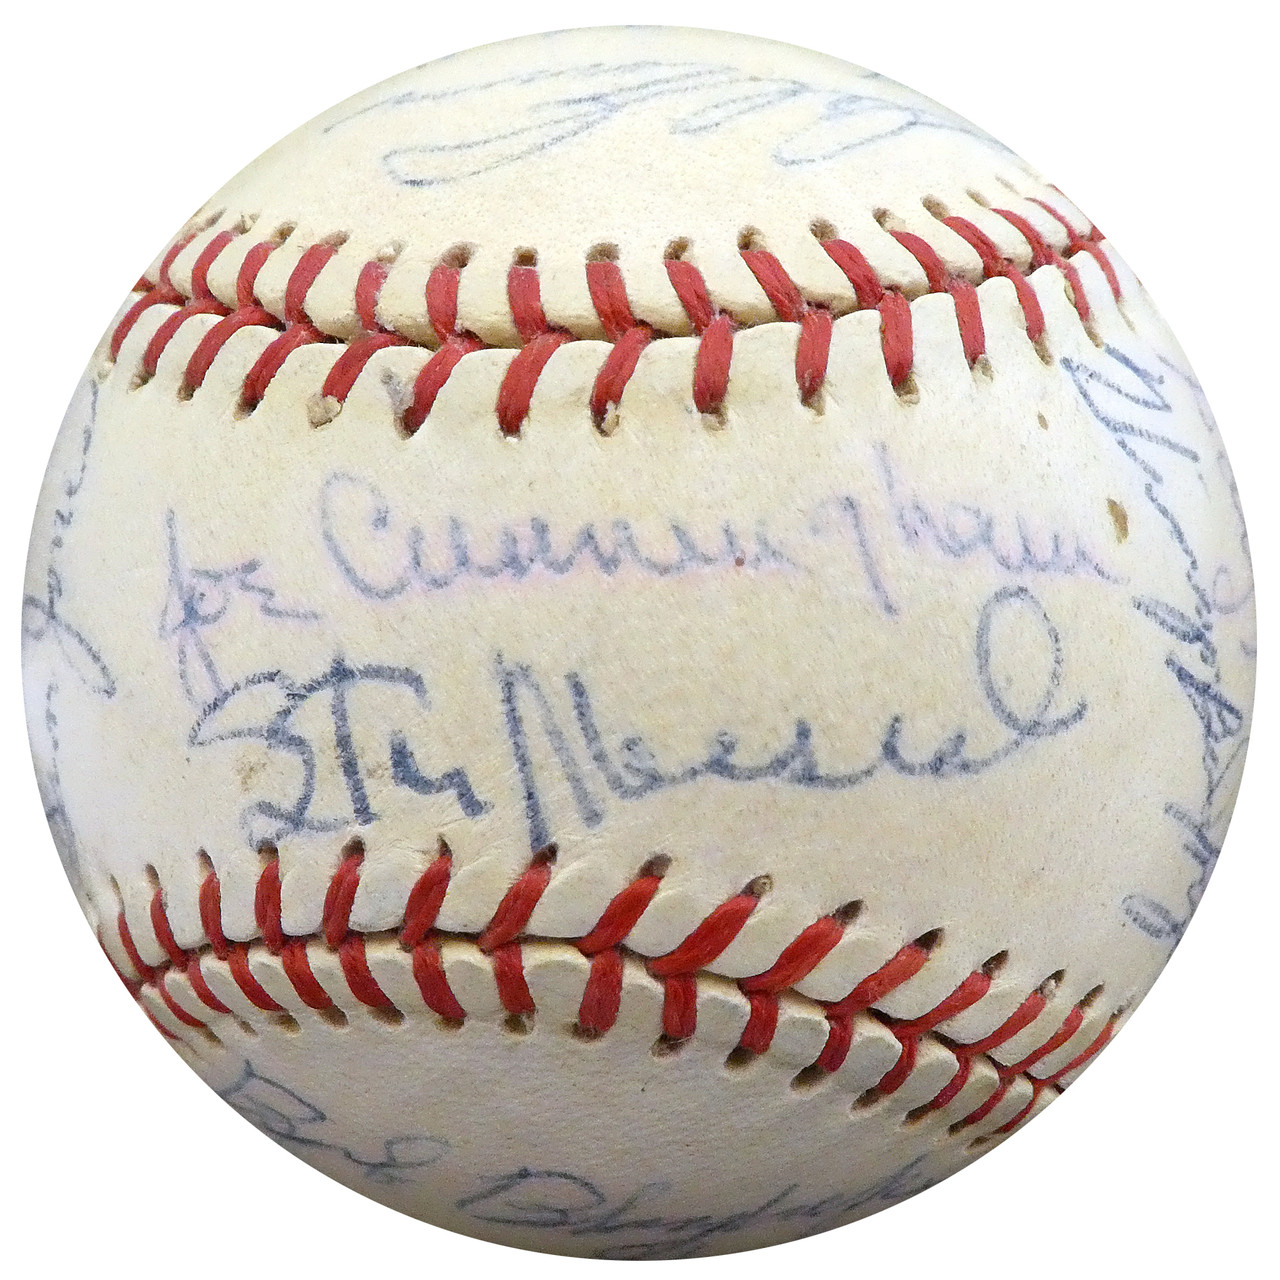 Stan Musial Signed Autographed Baseball Uda Upper Deck Hologram & Box